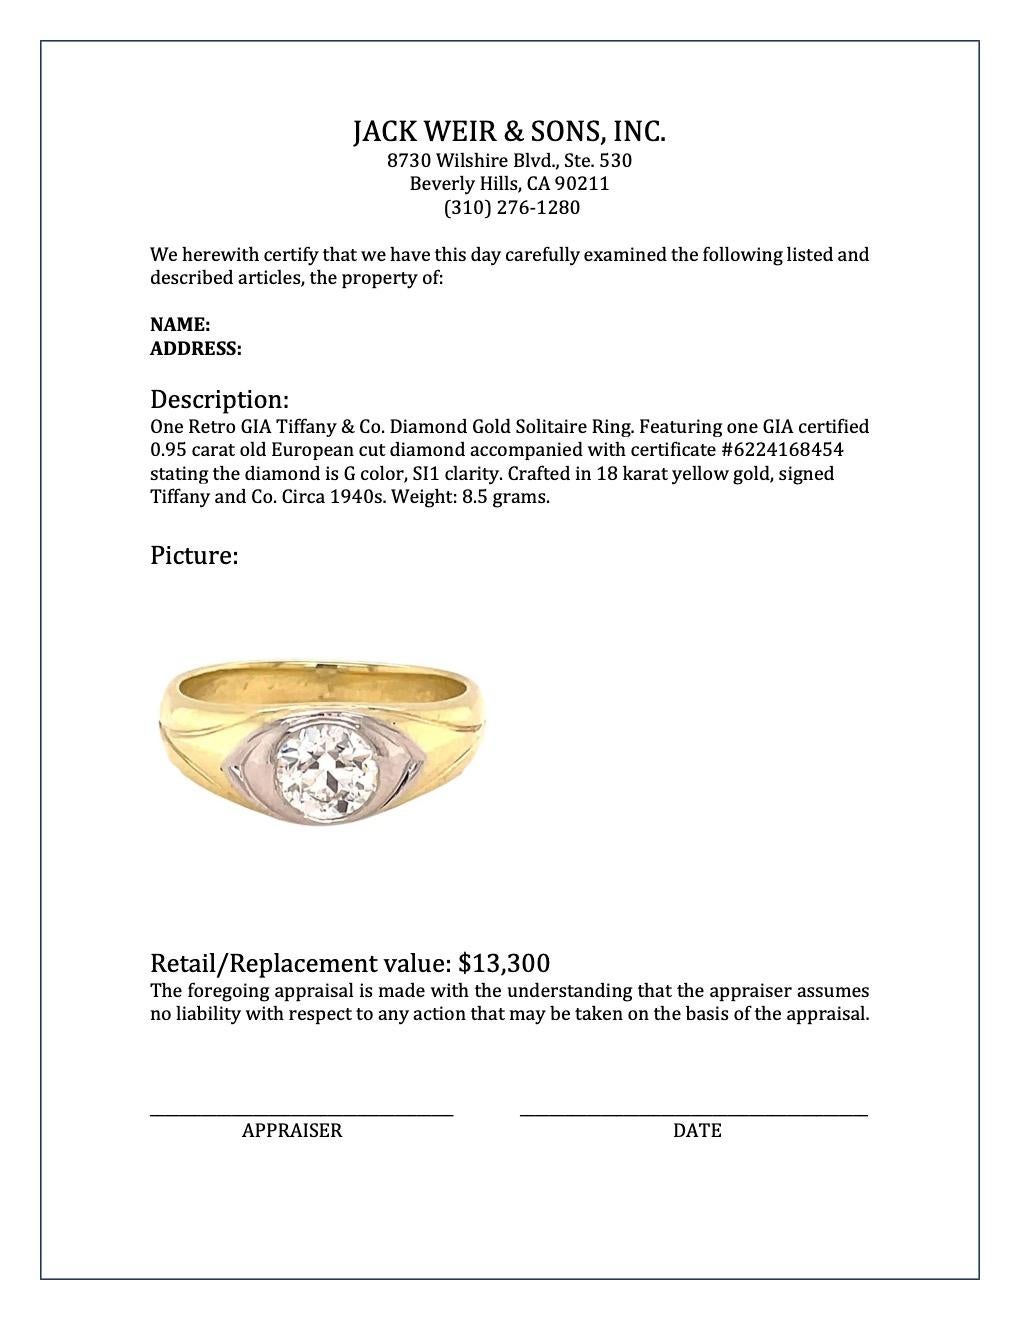 Retro GIA Tiffany & Co. Diamond Gold Solitaire Ring 2